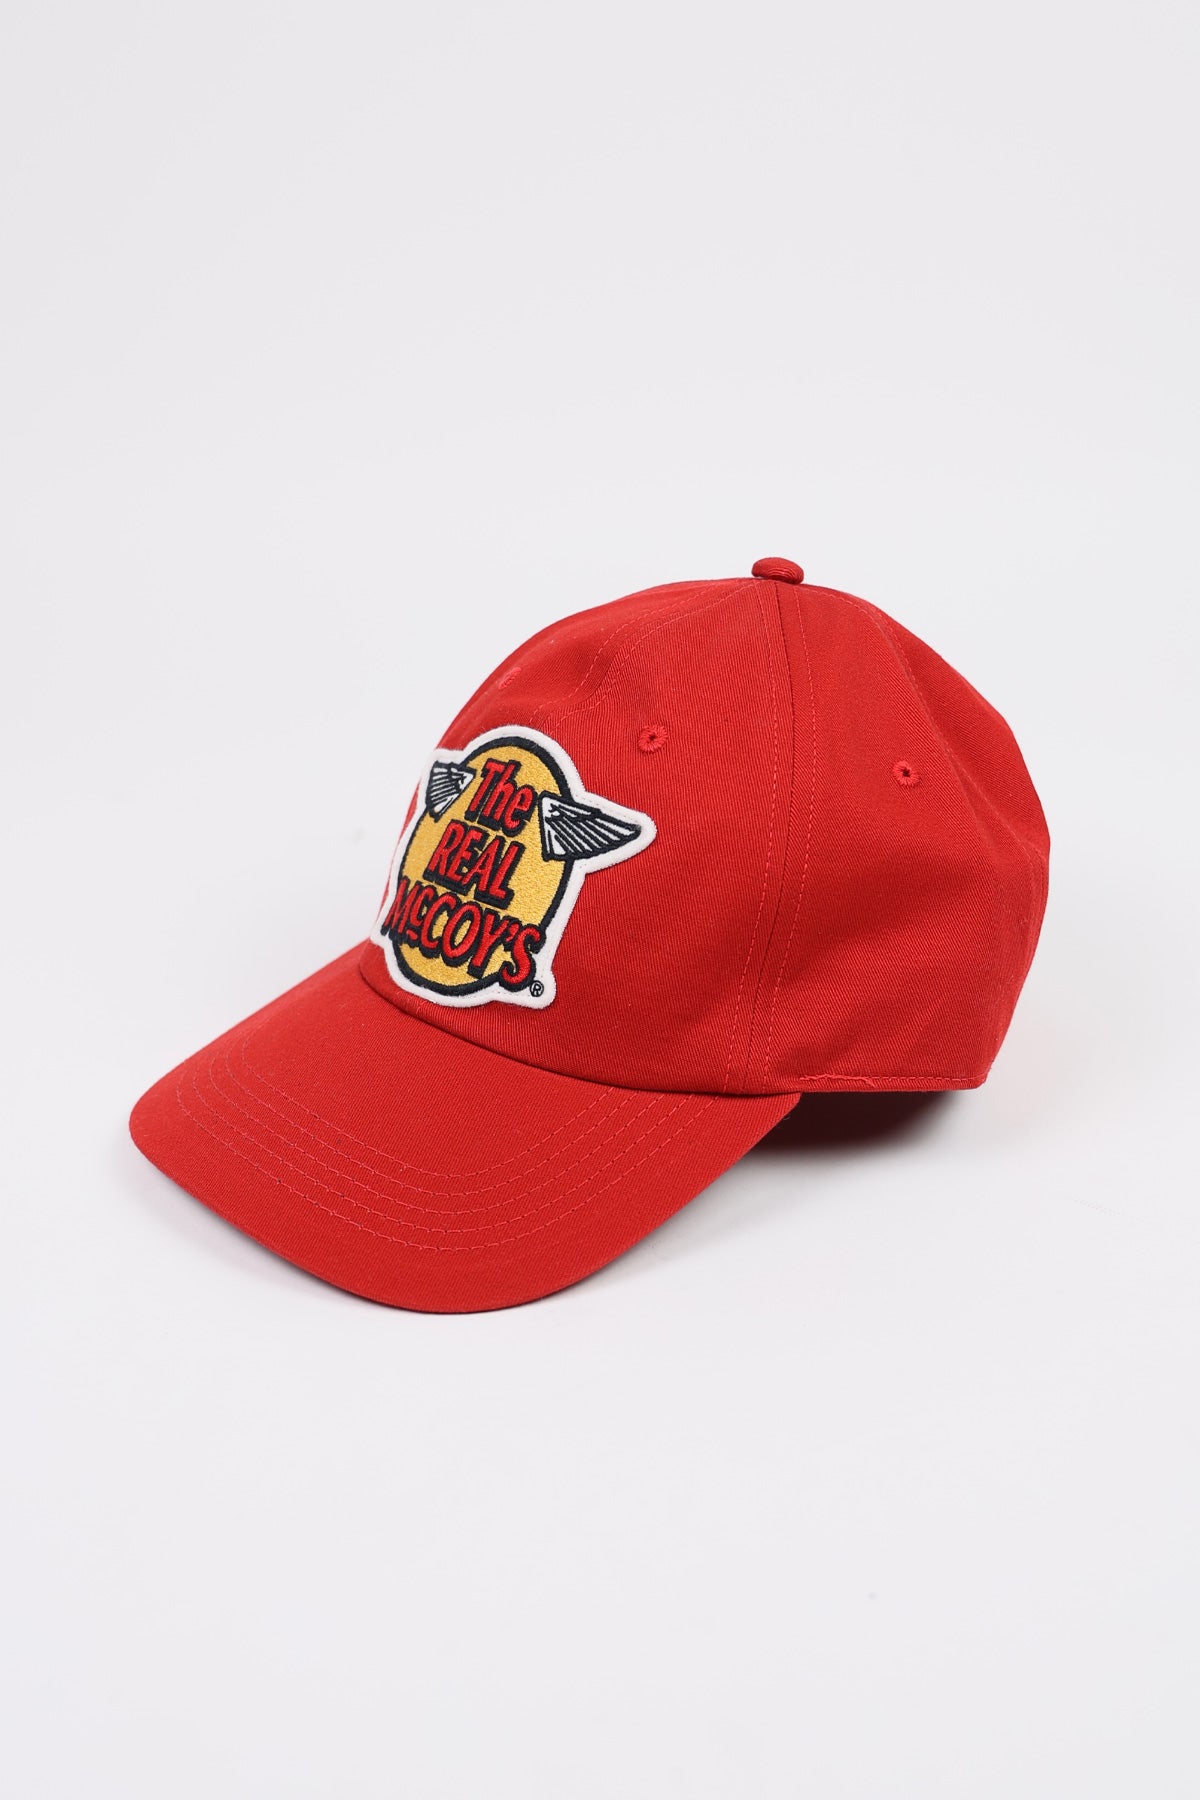 The Real McCoys Logo Baseball Cap - Red